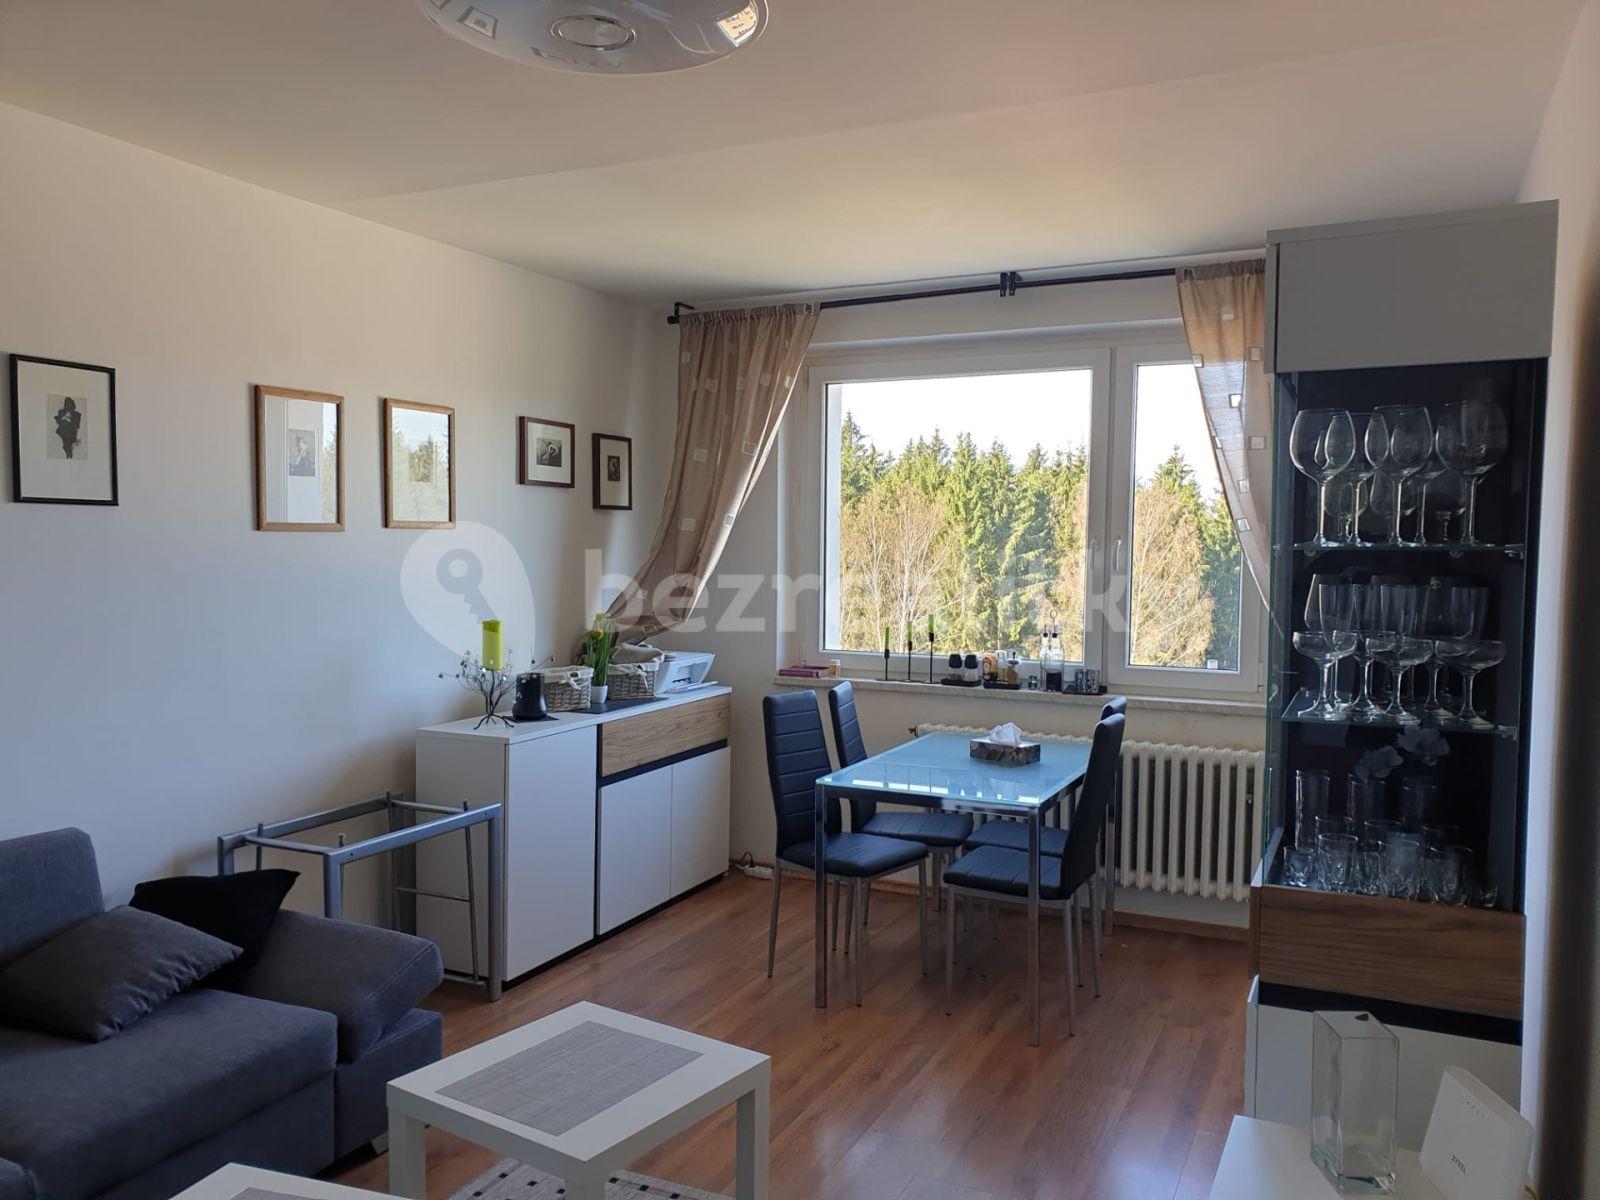 3 bedroom flat for sale, 73 m², Sídliště, Rotava, Karlovarský Region